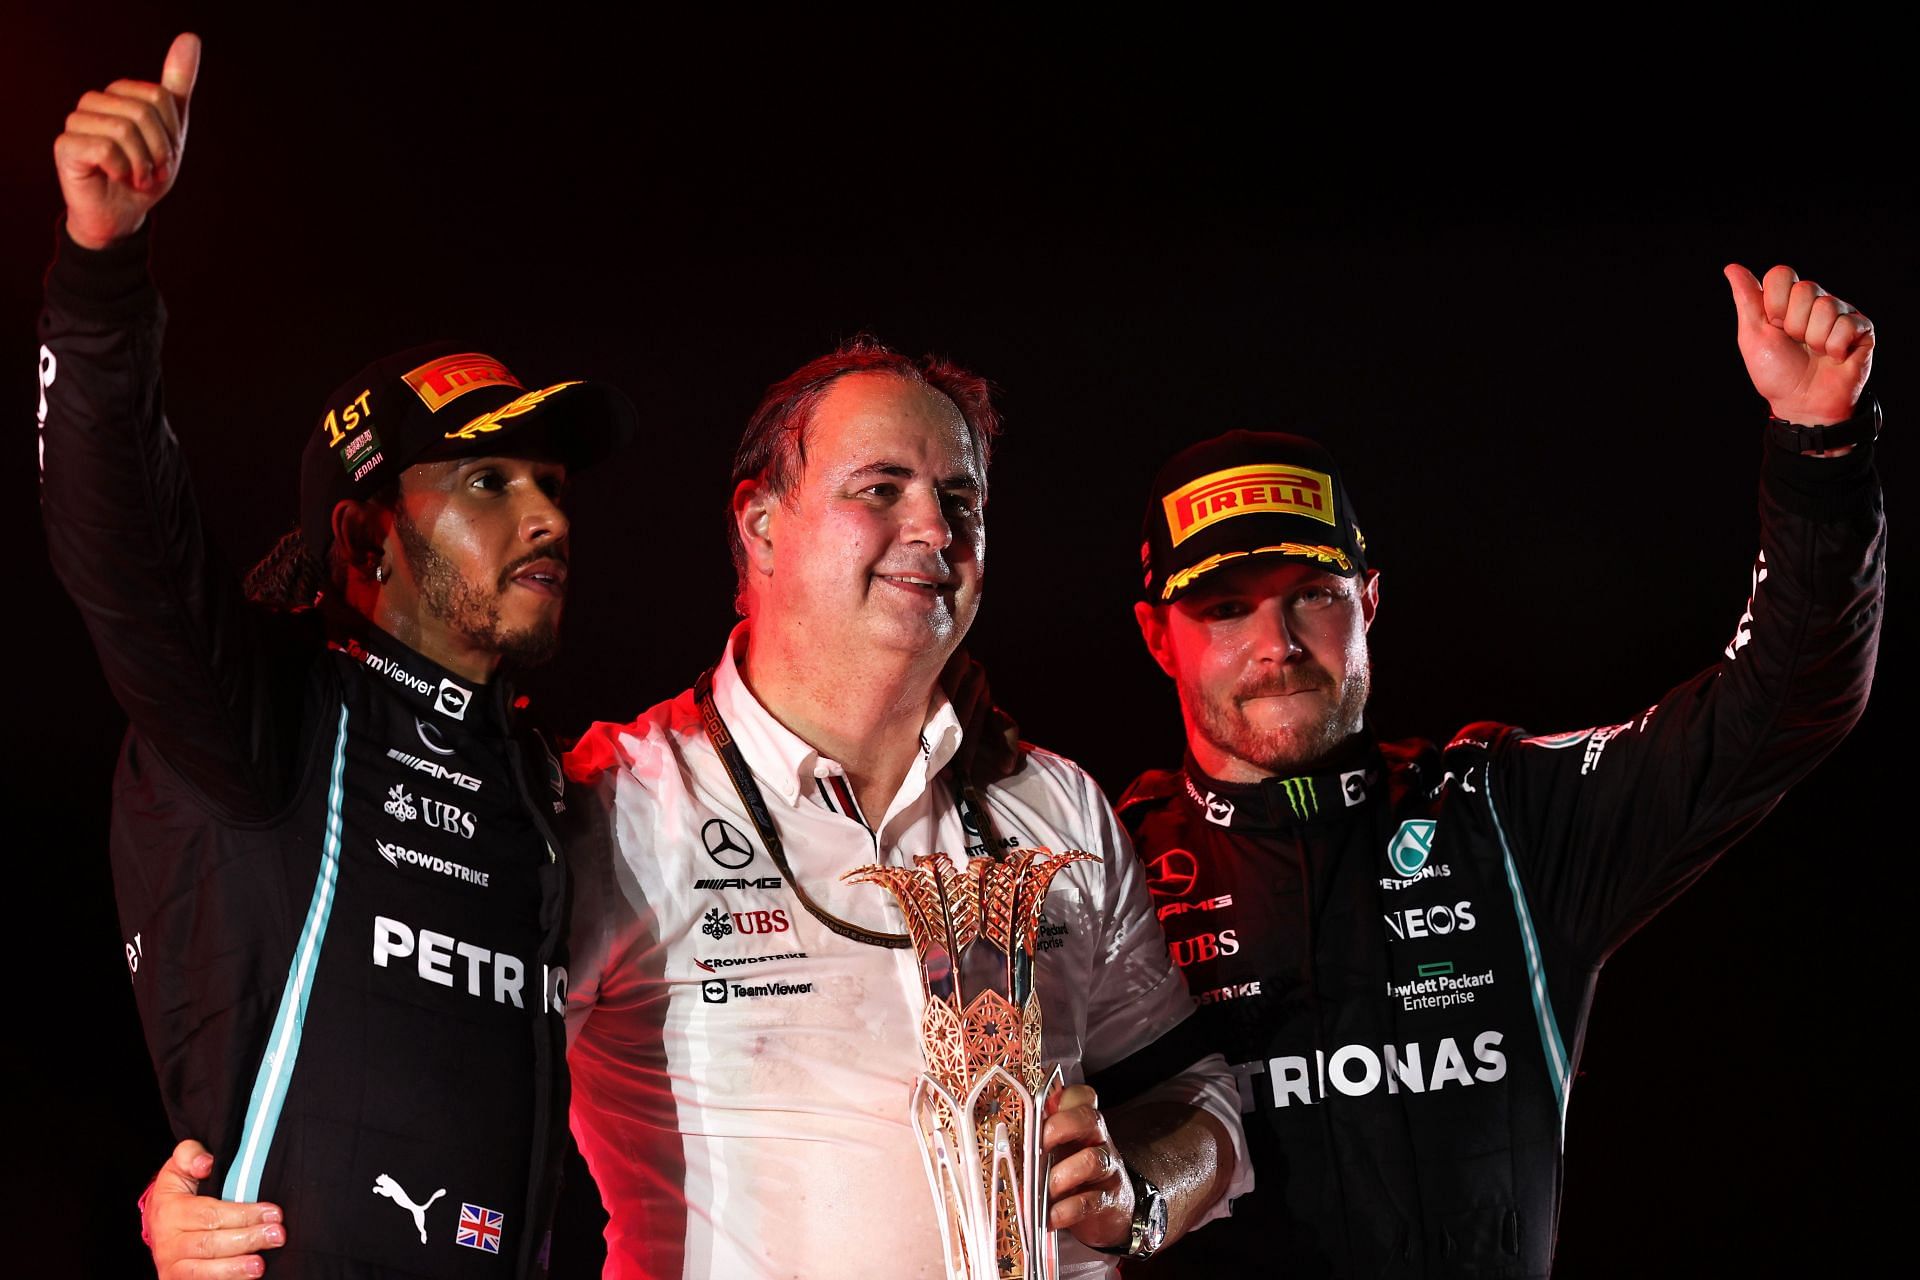 F1 Grand Prix of Saudi Arabia - Lewis Hamilton and Valtteri Bottas share their final podium as teammates